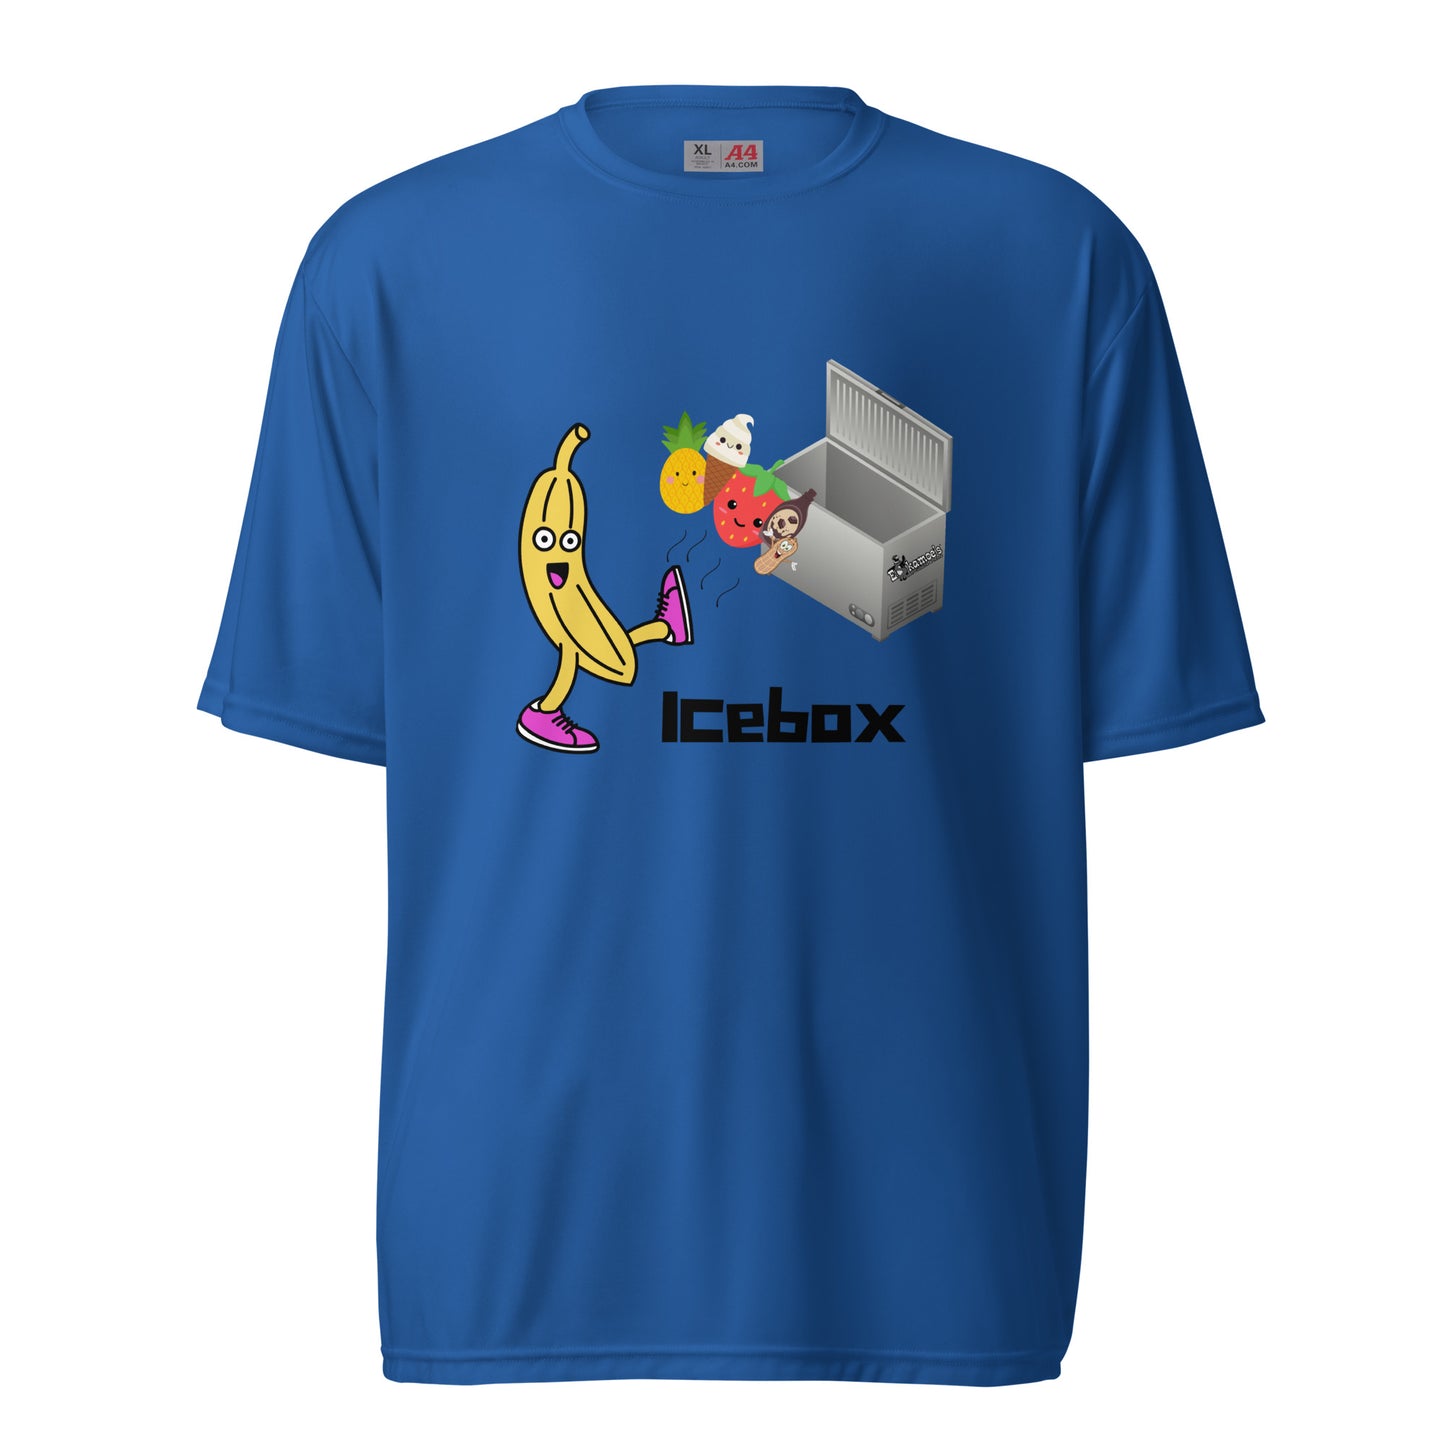 Icebox - Unisex performance crew neck t-shirt